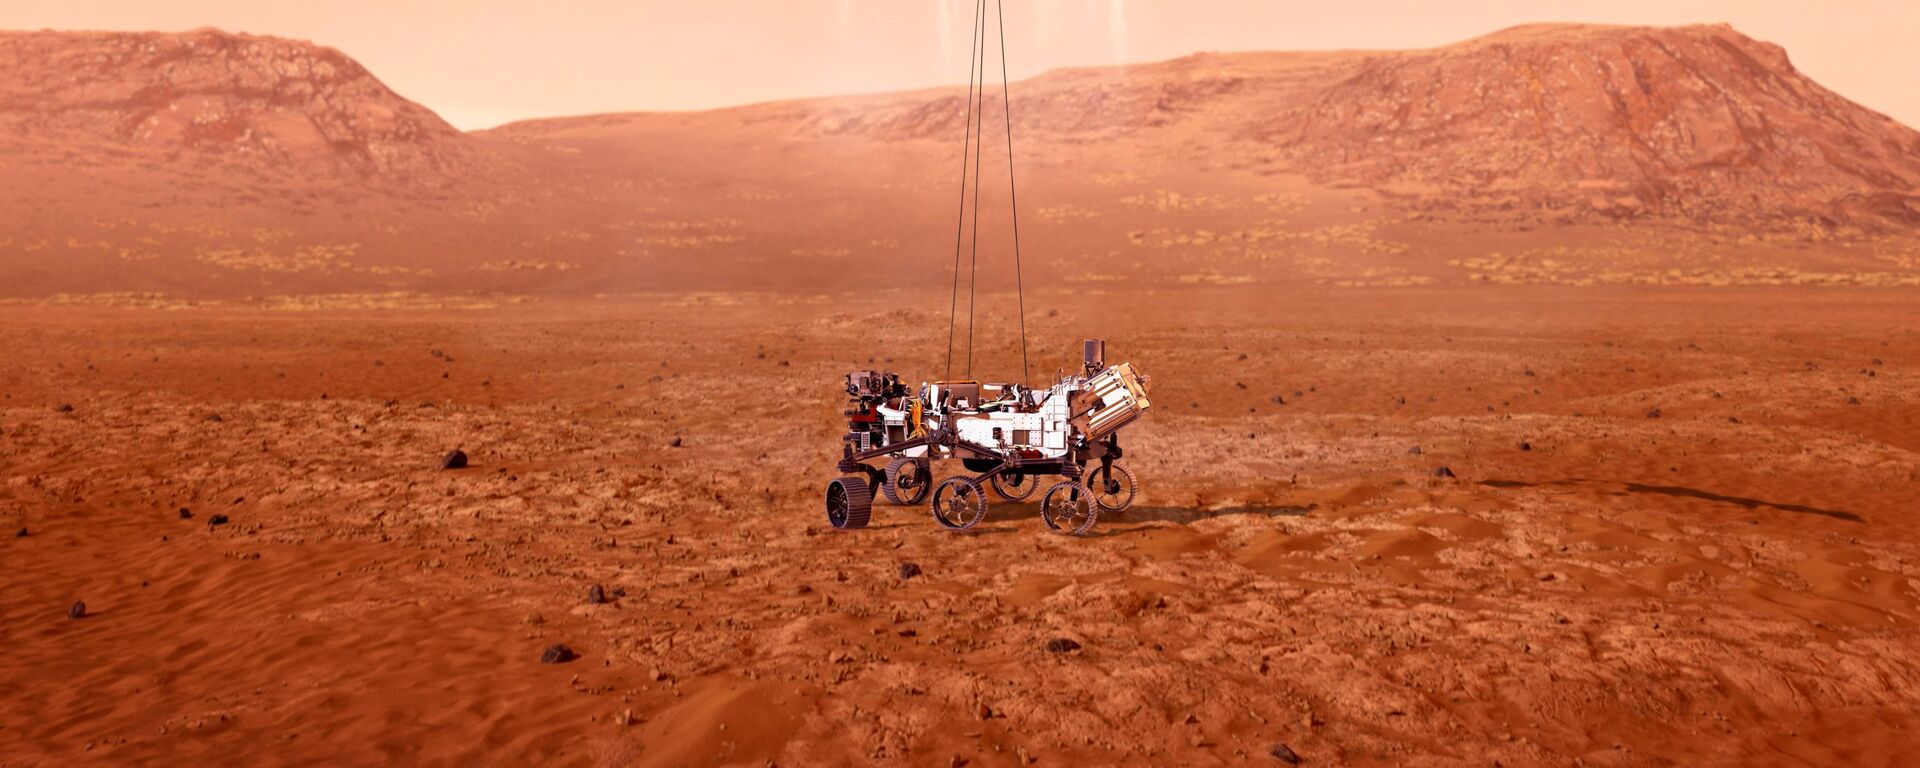 Rover „Istrajnost“ sleće na Mars - Sputnik Srbija, 1920, 31.10.2021